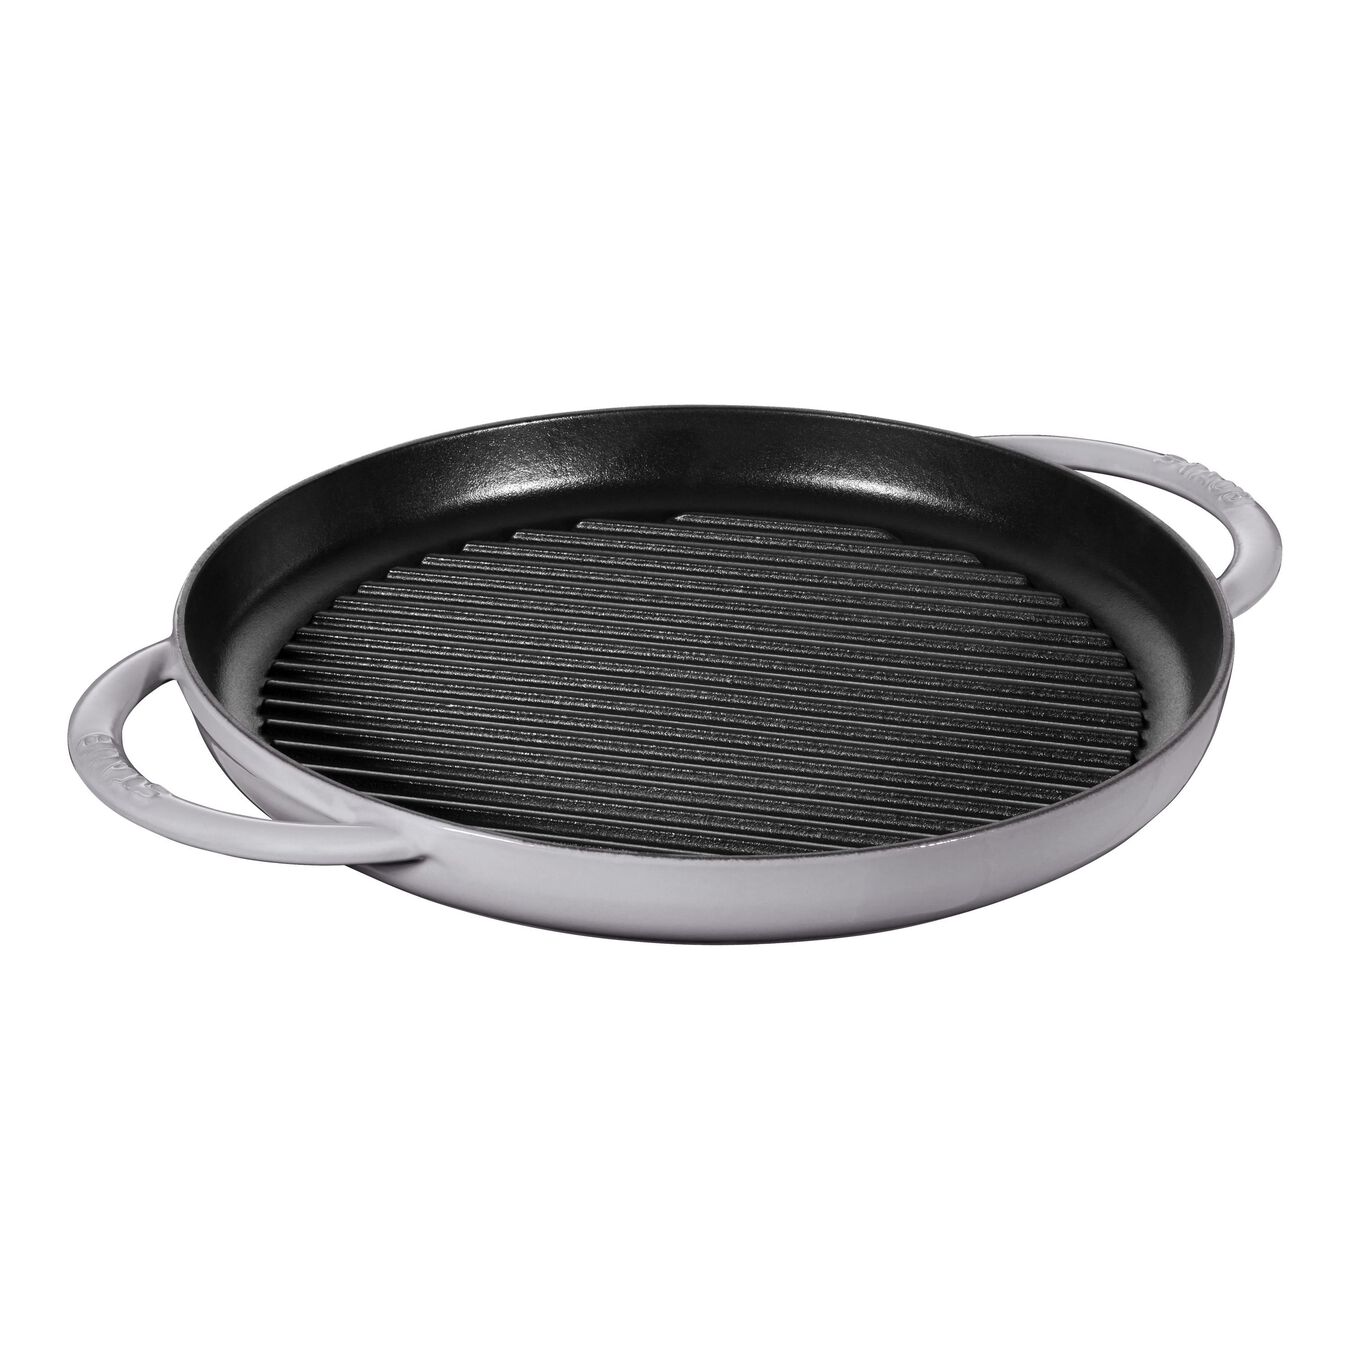 30 cm round Cast iron Pure Grill graphite-grey,,large 1